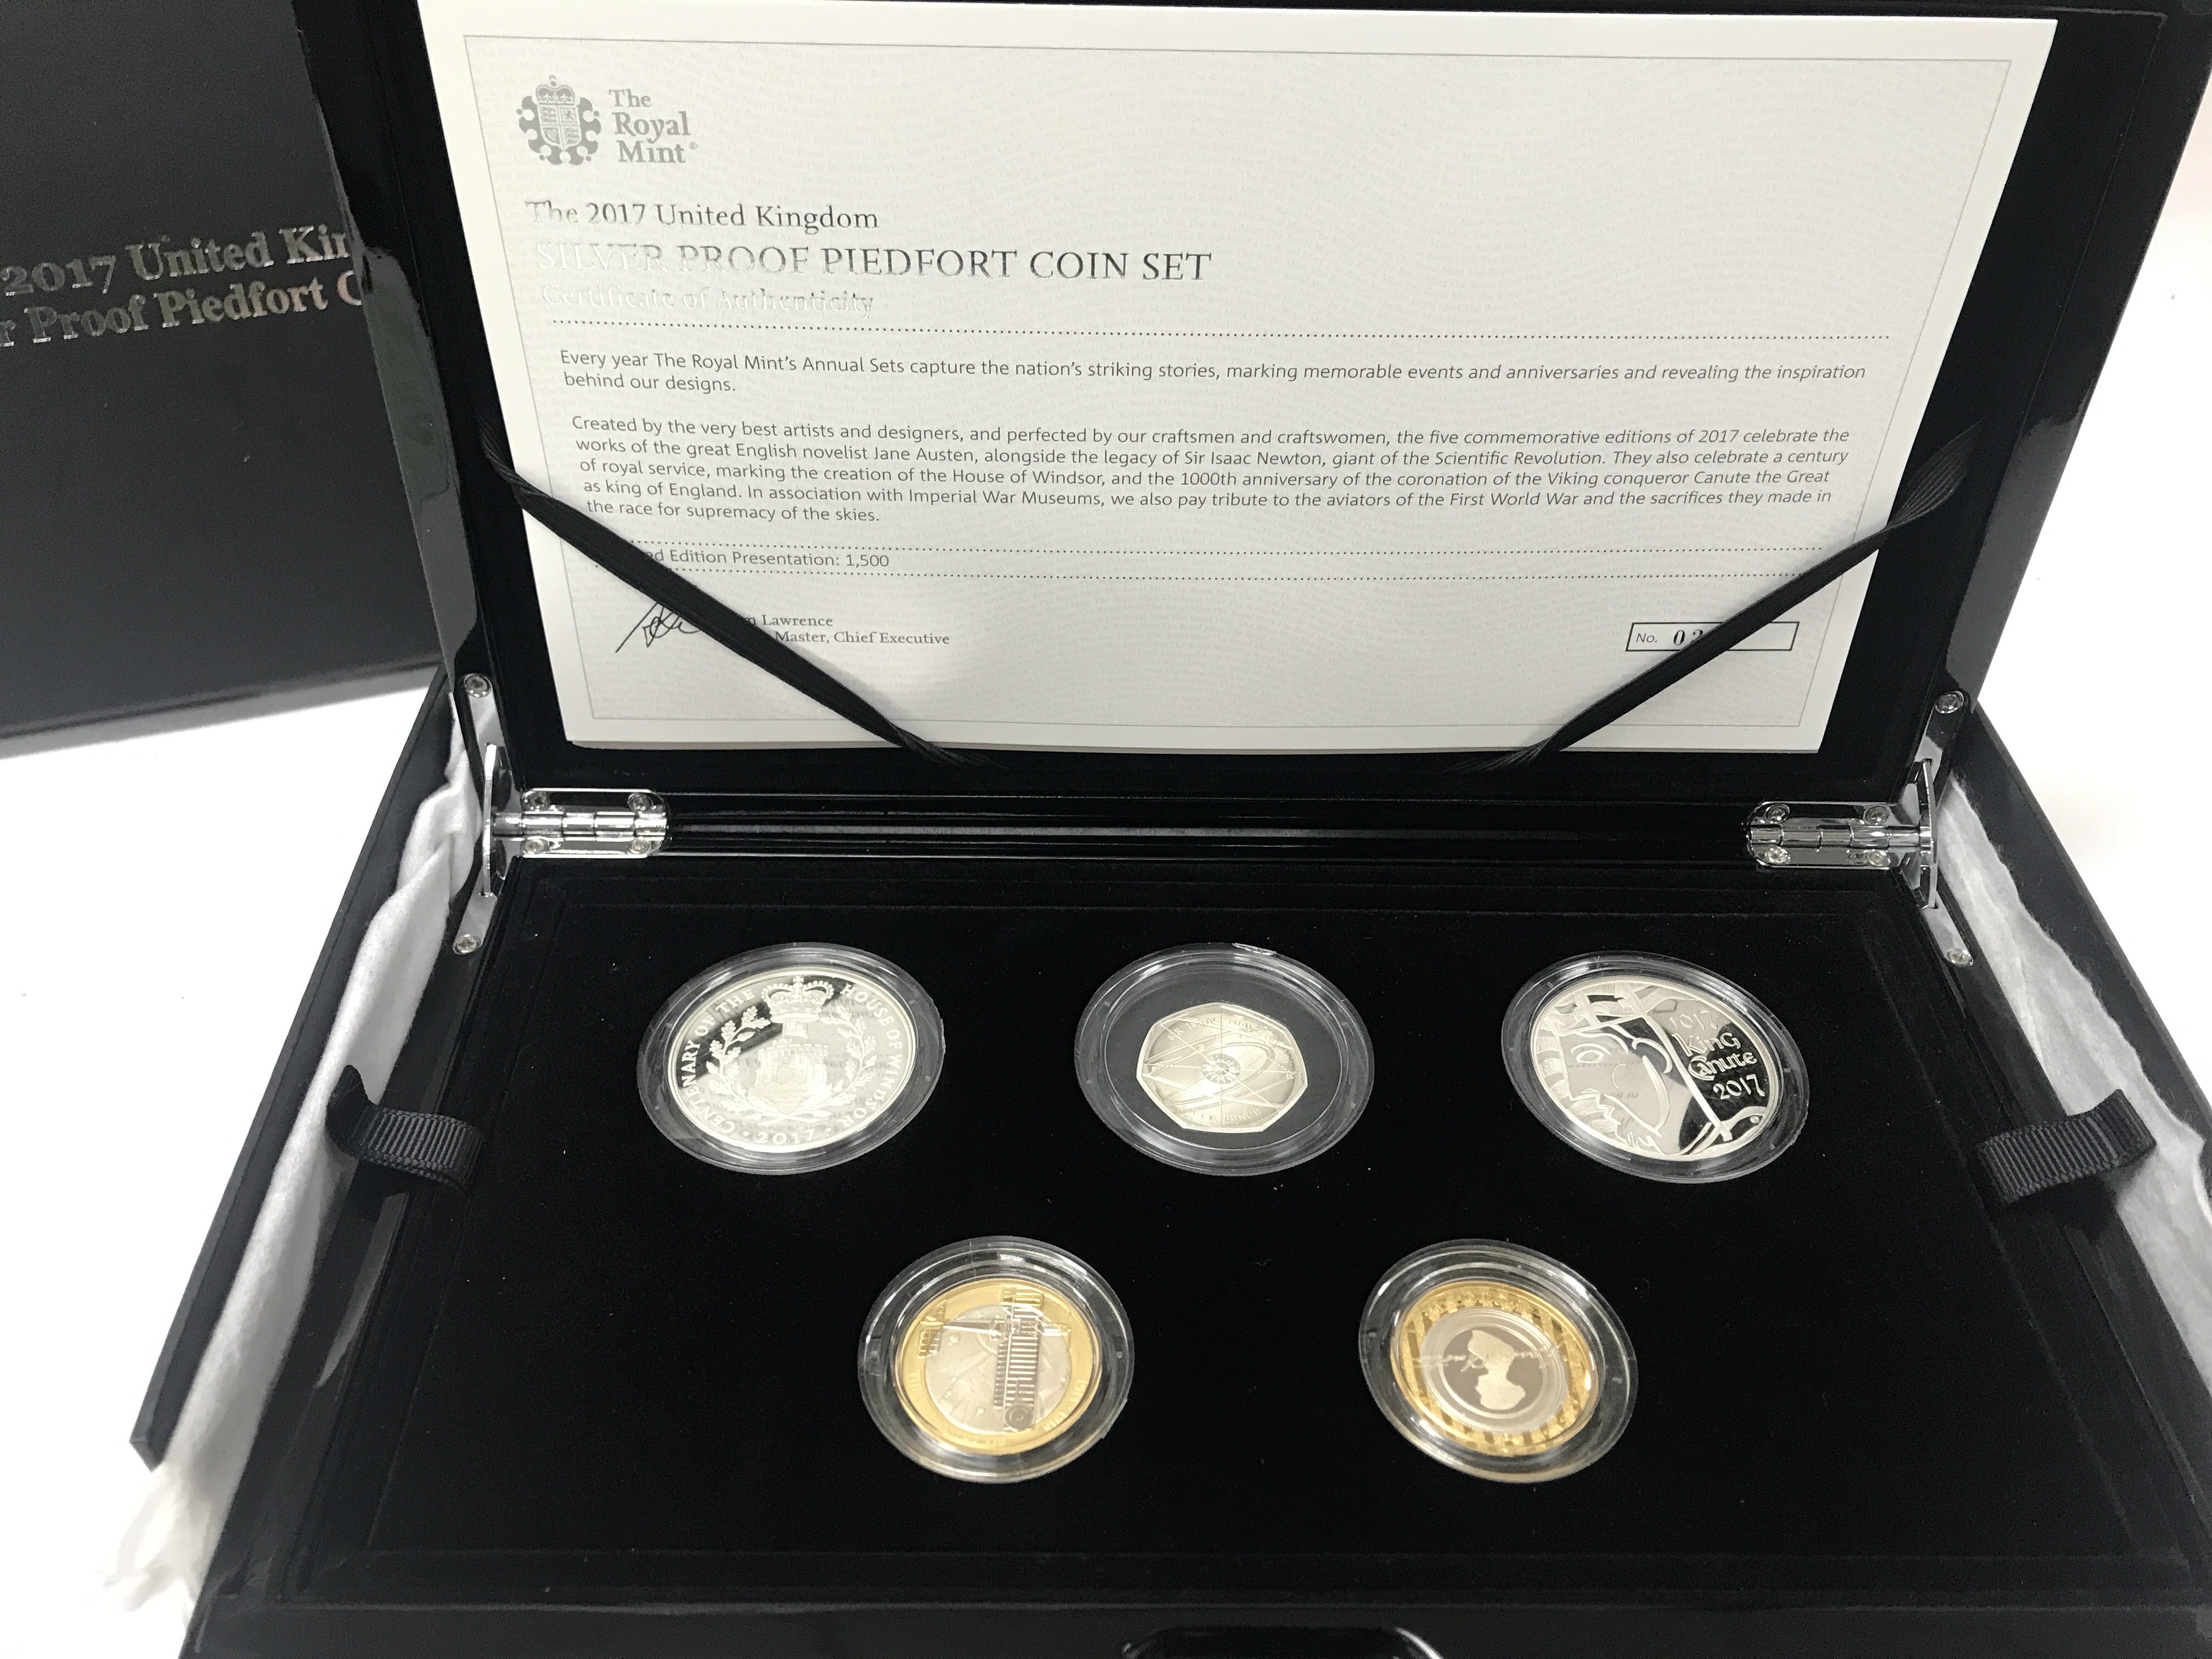 2017 United Kingdom Silver Proof Piedfort coin set